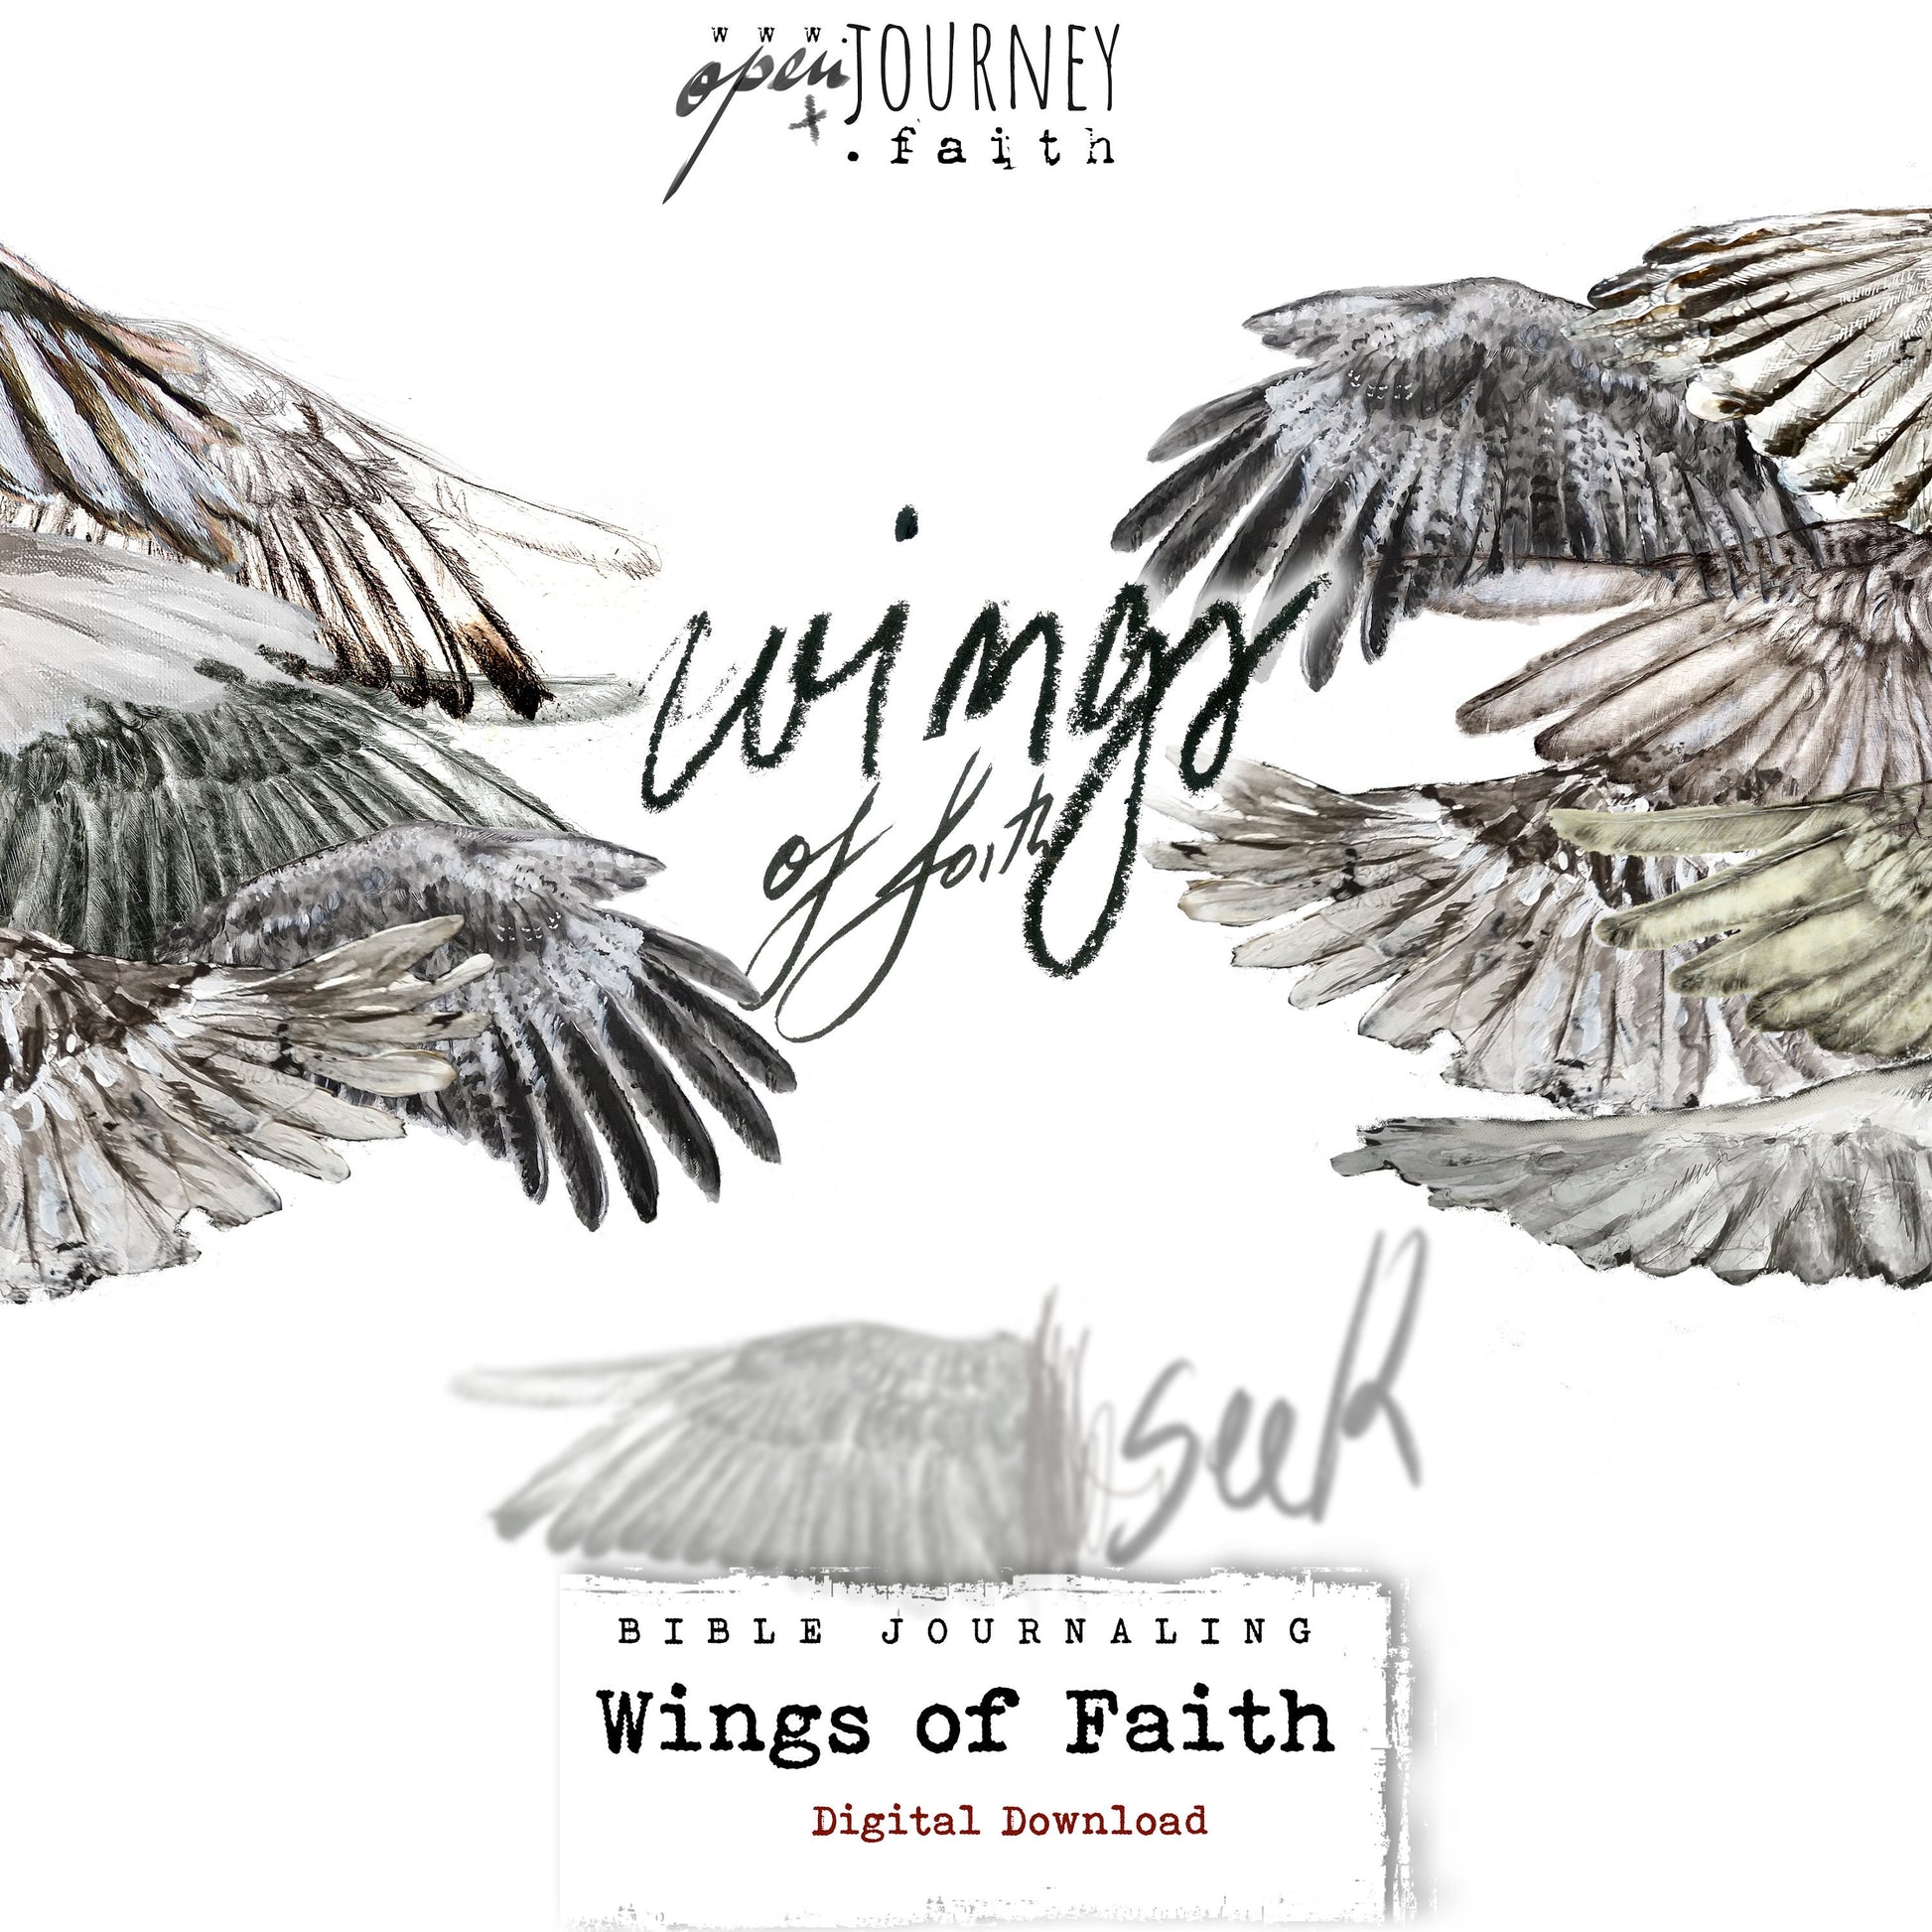 Wings of Faith - a creative bible study, Bible journaling creative devotional - digital download